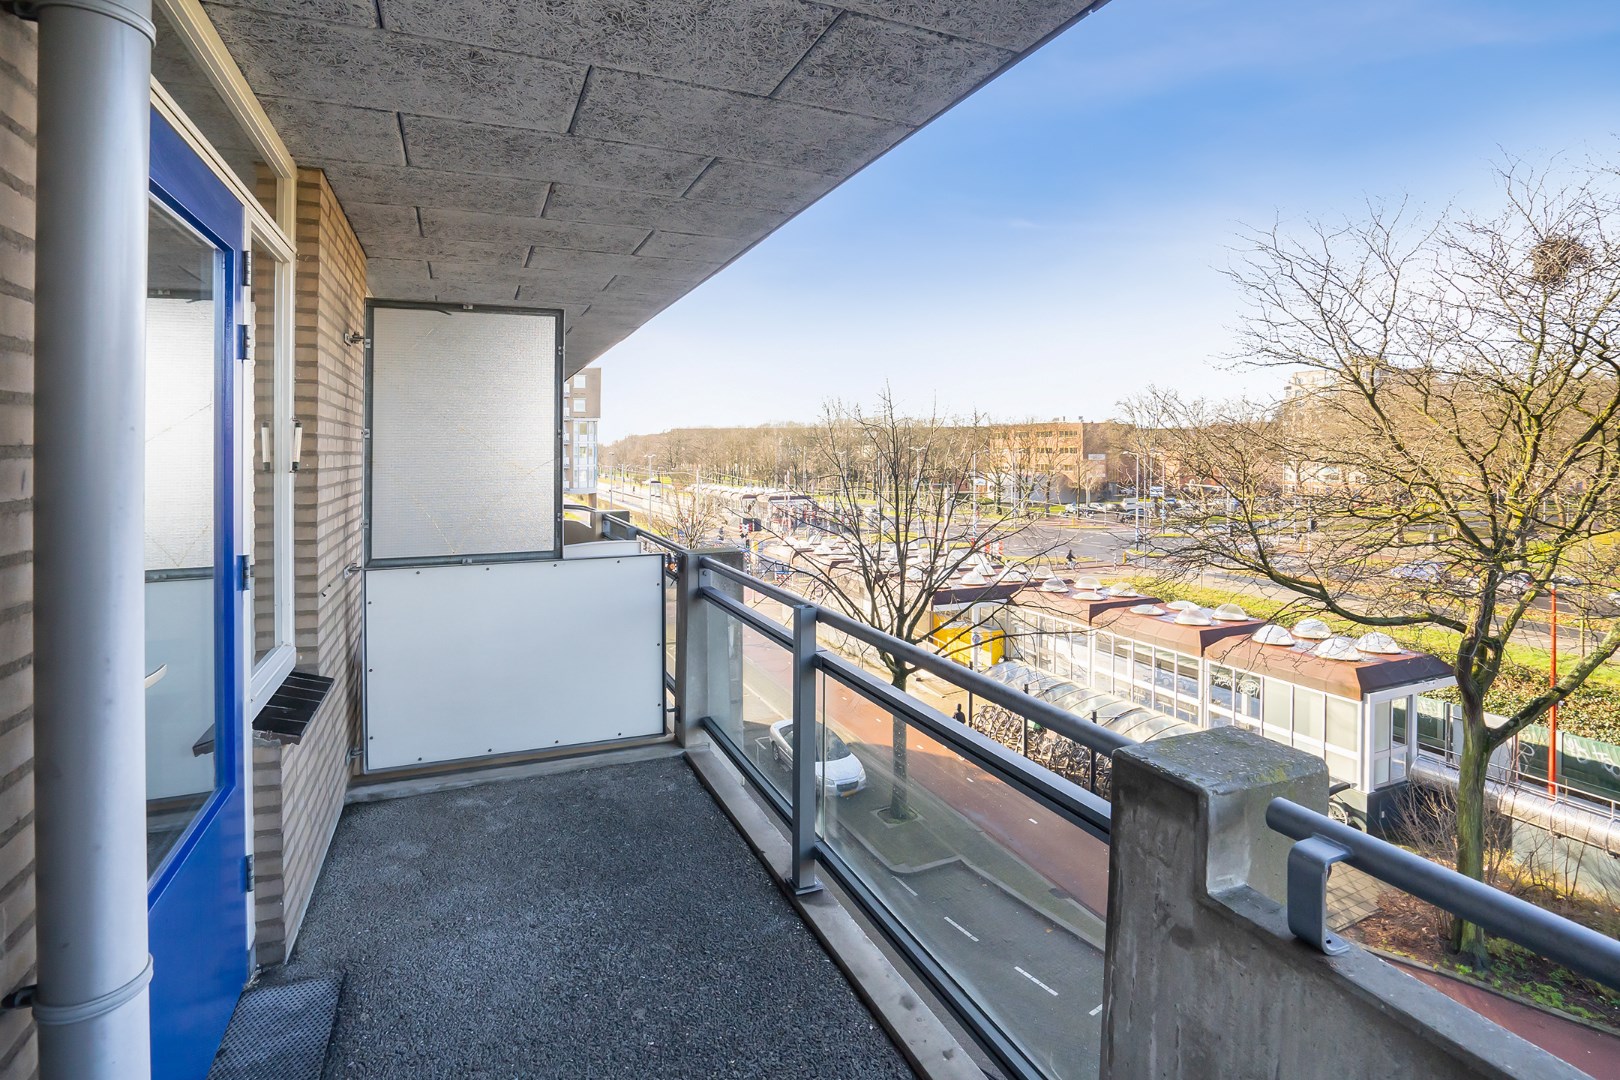 Ruim 3-kamer appartement met balkon, berging op de begane grond en met centrale ligging in Oosterflank! 